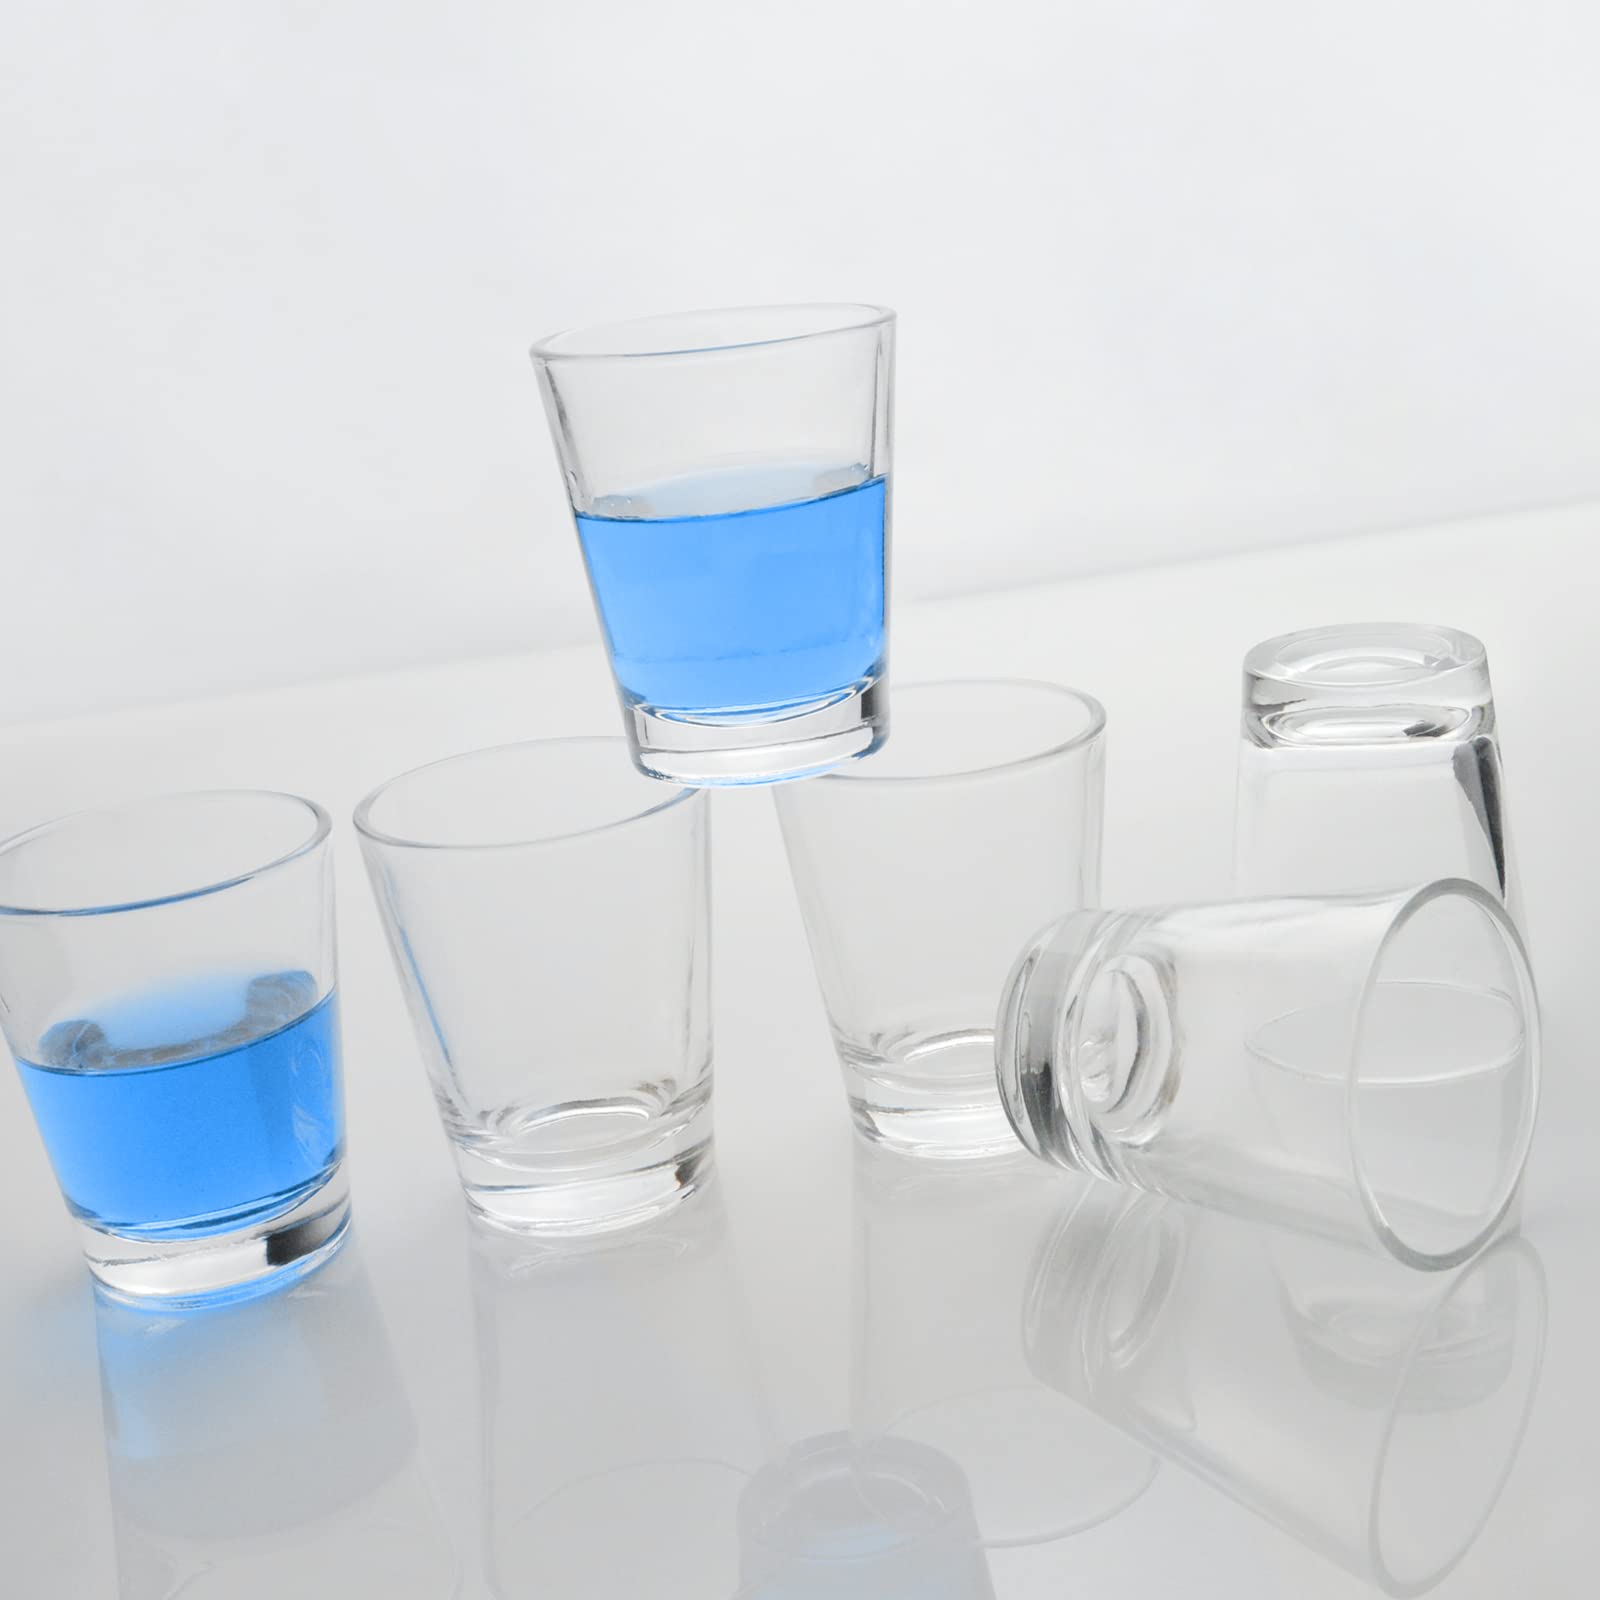 Asipmor Shot Glass Set with Heavy Base, 1.5 Ounce Tequila Shot Glasses Set of 6, Whiskey Shot Glass, Clear Espresso Shot Glass